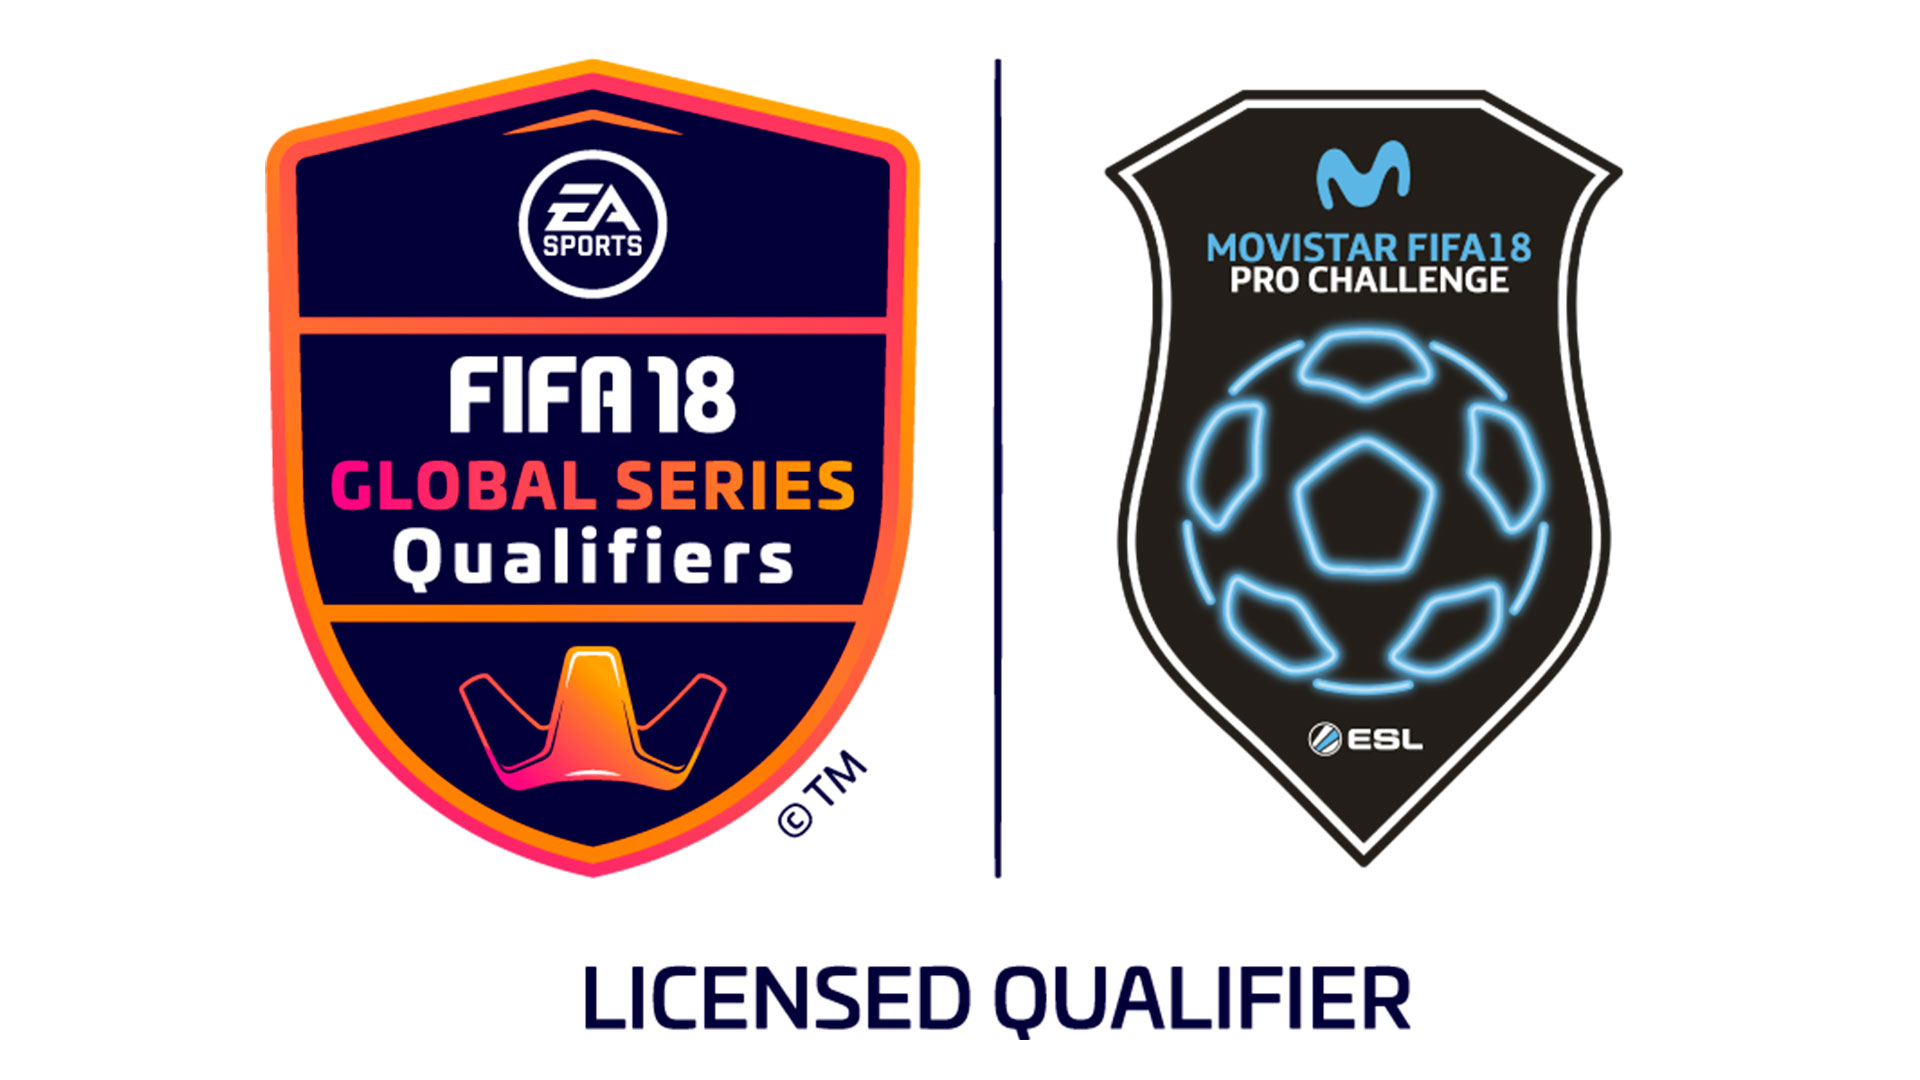 Movistar FIFA 18 ESL Pro Challenge